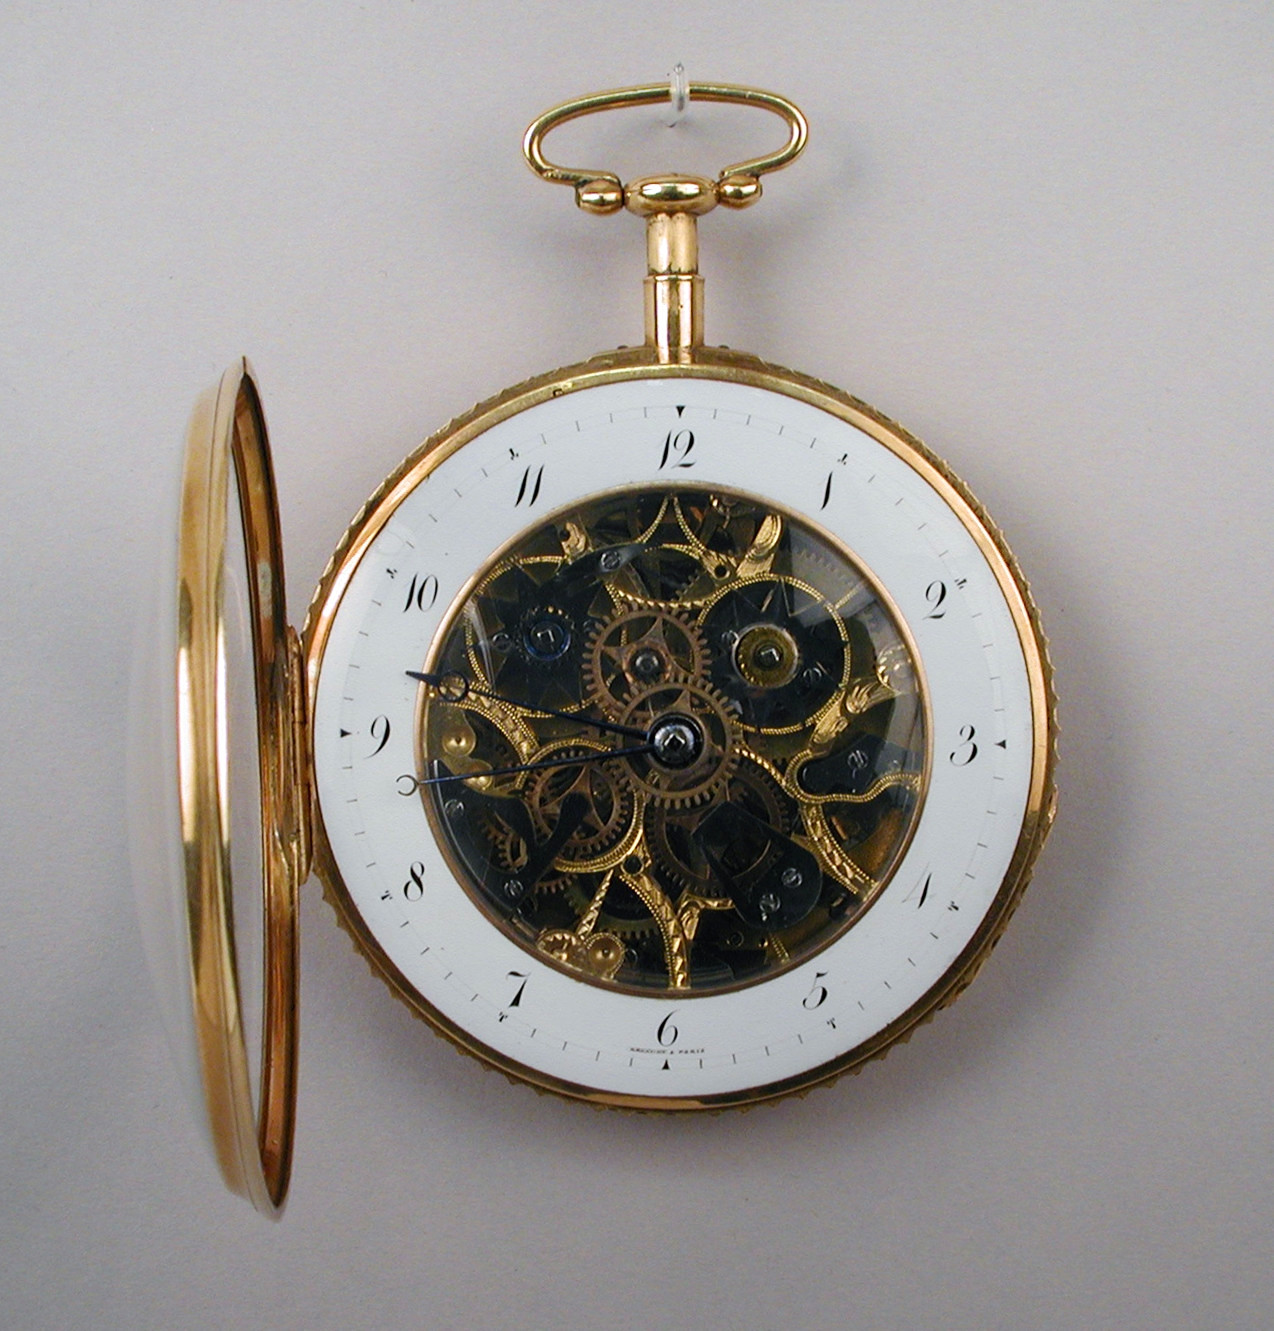 1810. Watch. Swiss, La Chaux-de-Fonds. Gold, glass. metmuseum